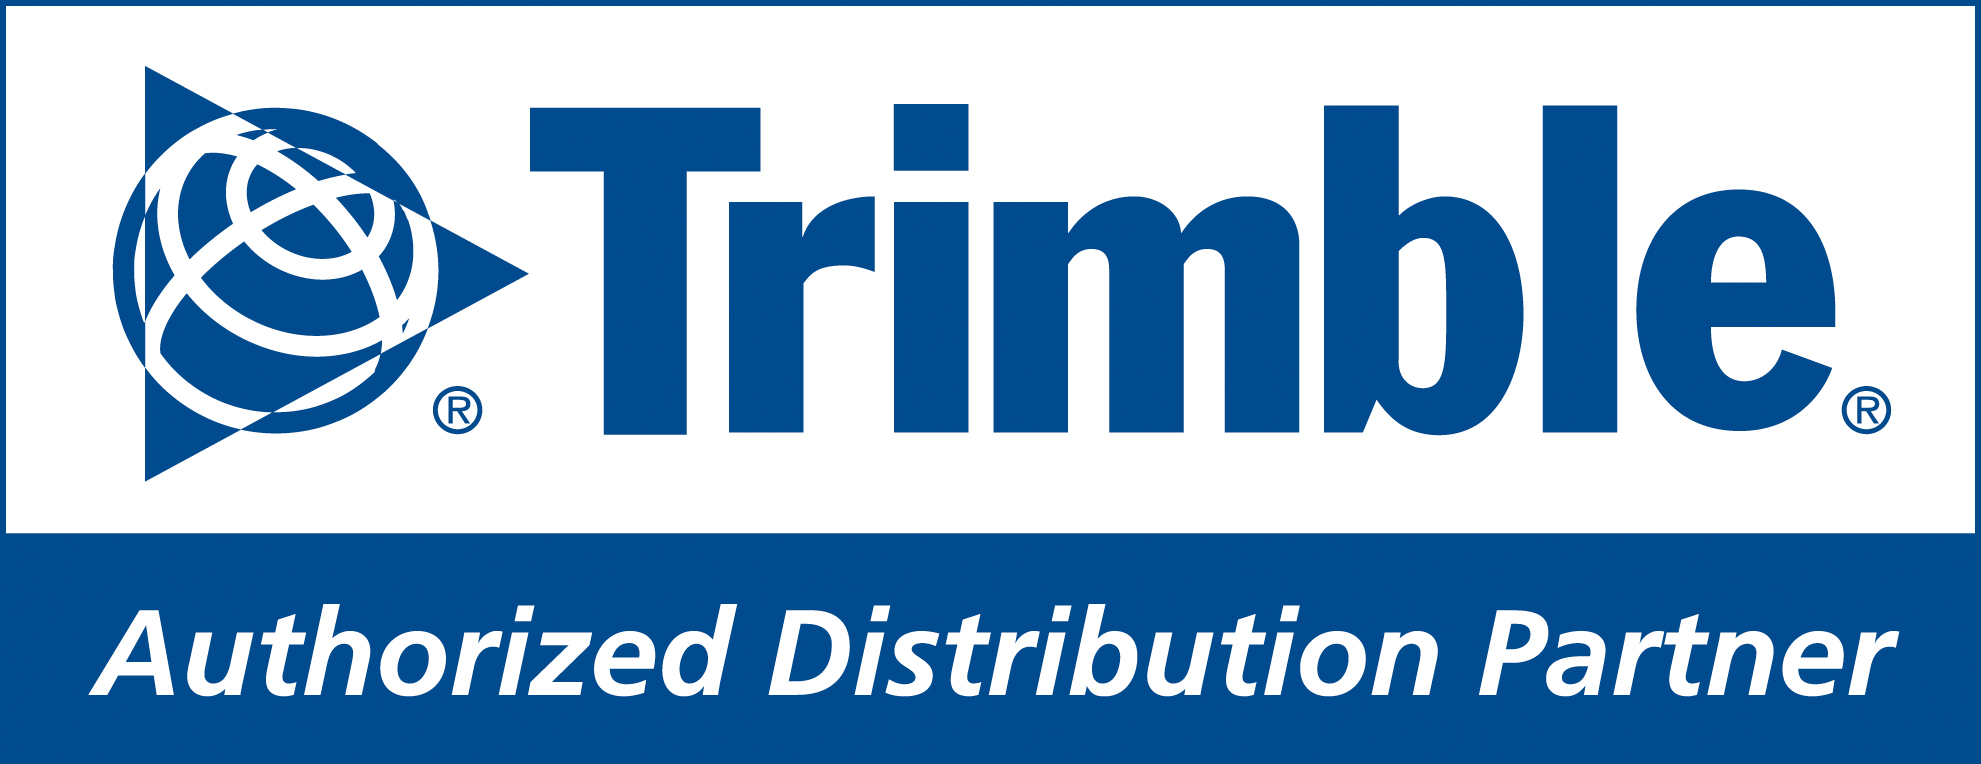 trimble-authorized-distribution-partner-1-.jpg